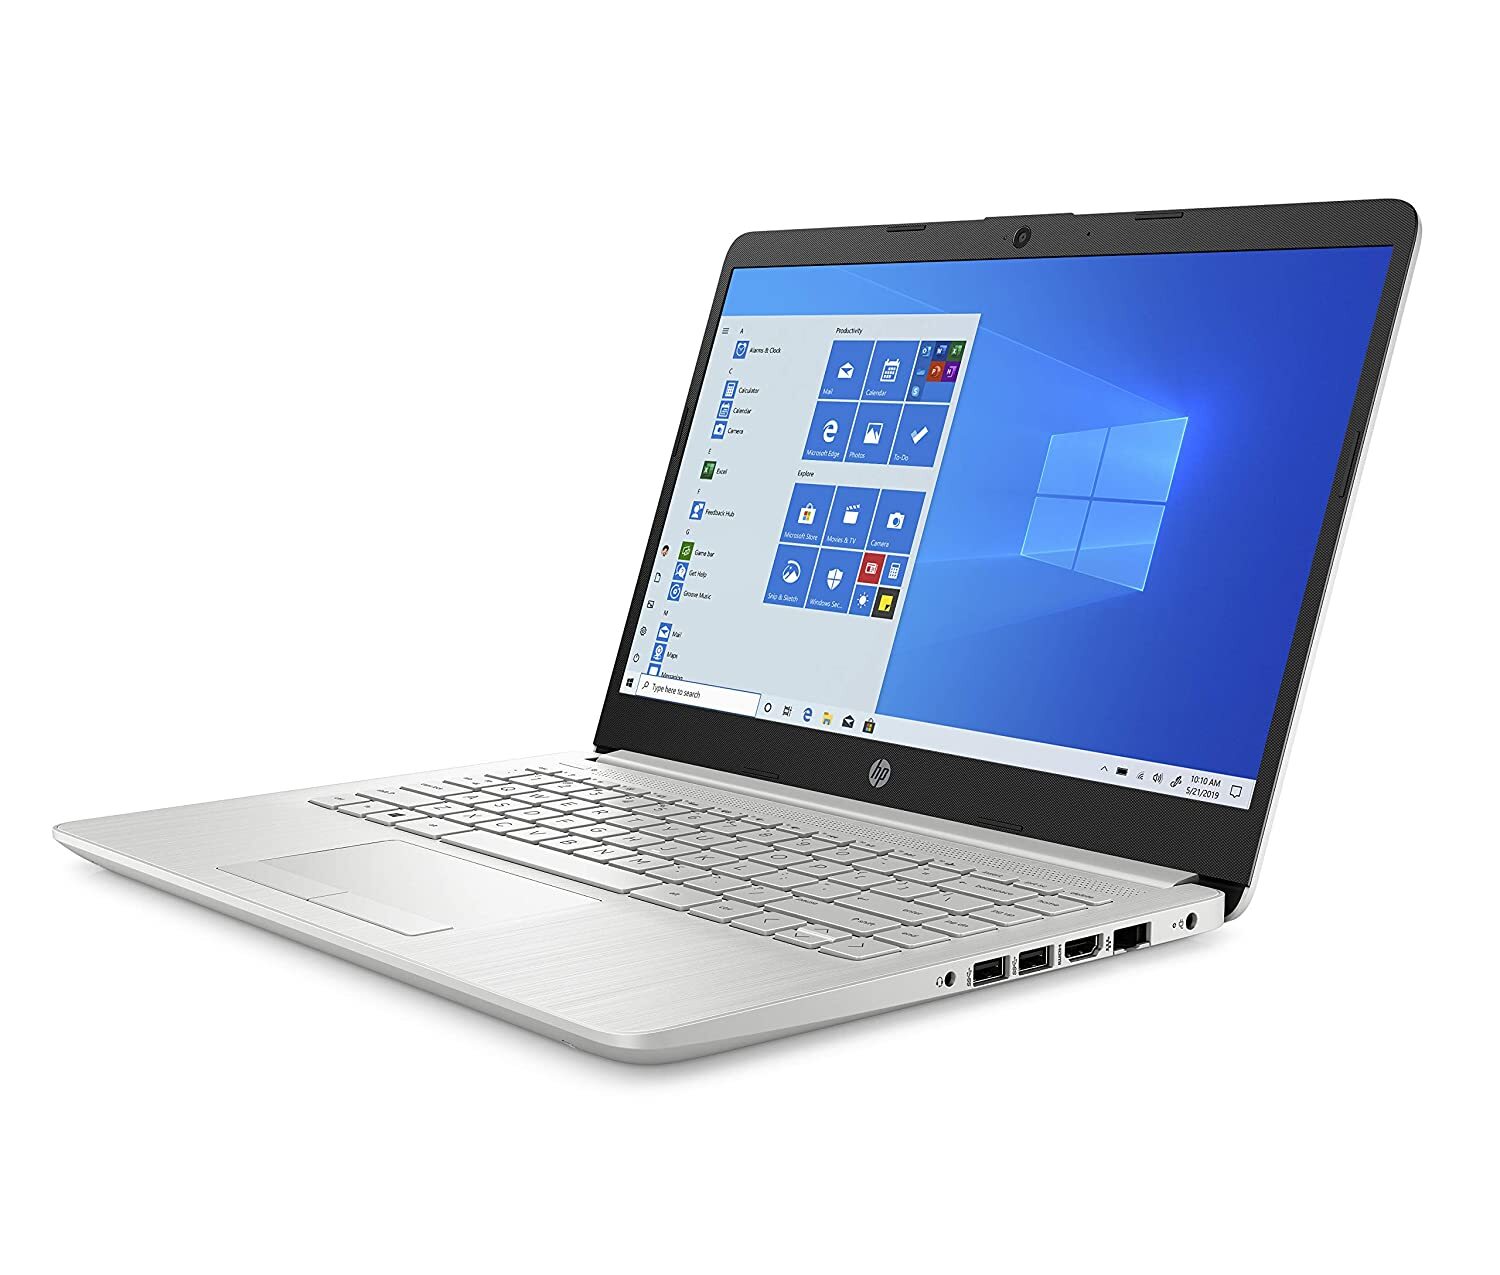 HP 14 Laptop (Ryzen 5 3500U/8GB/1TB HDD + 256GB SSD/Win 10/Microsoft Office 2019/Radeon Vega 8 Graphics), DK0093AU-M000000000476 www.mysocially.com